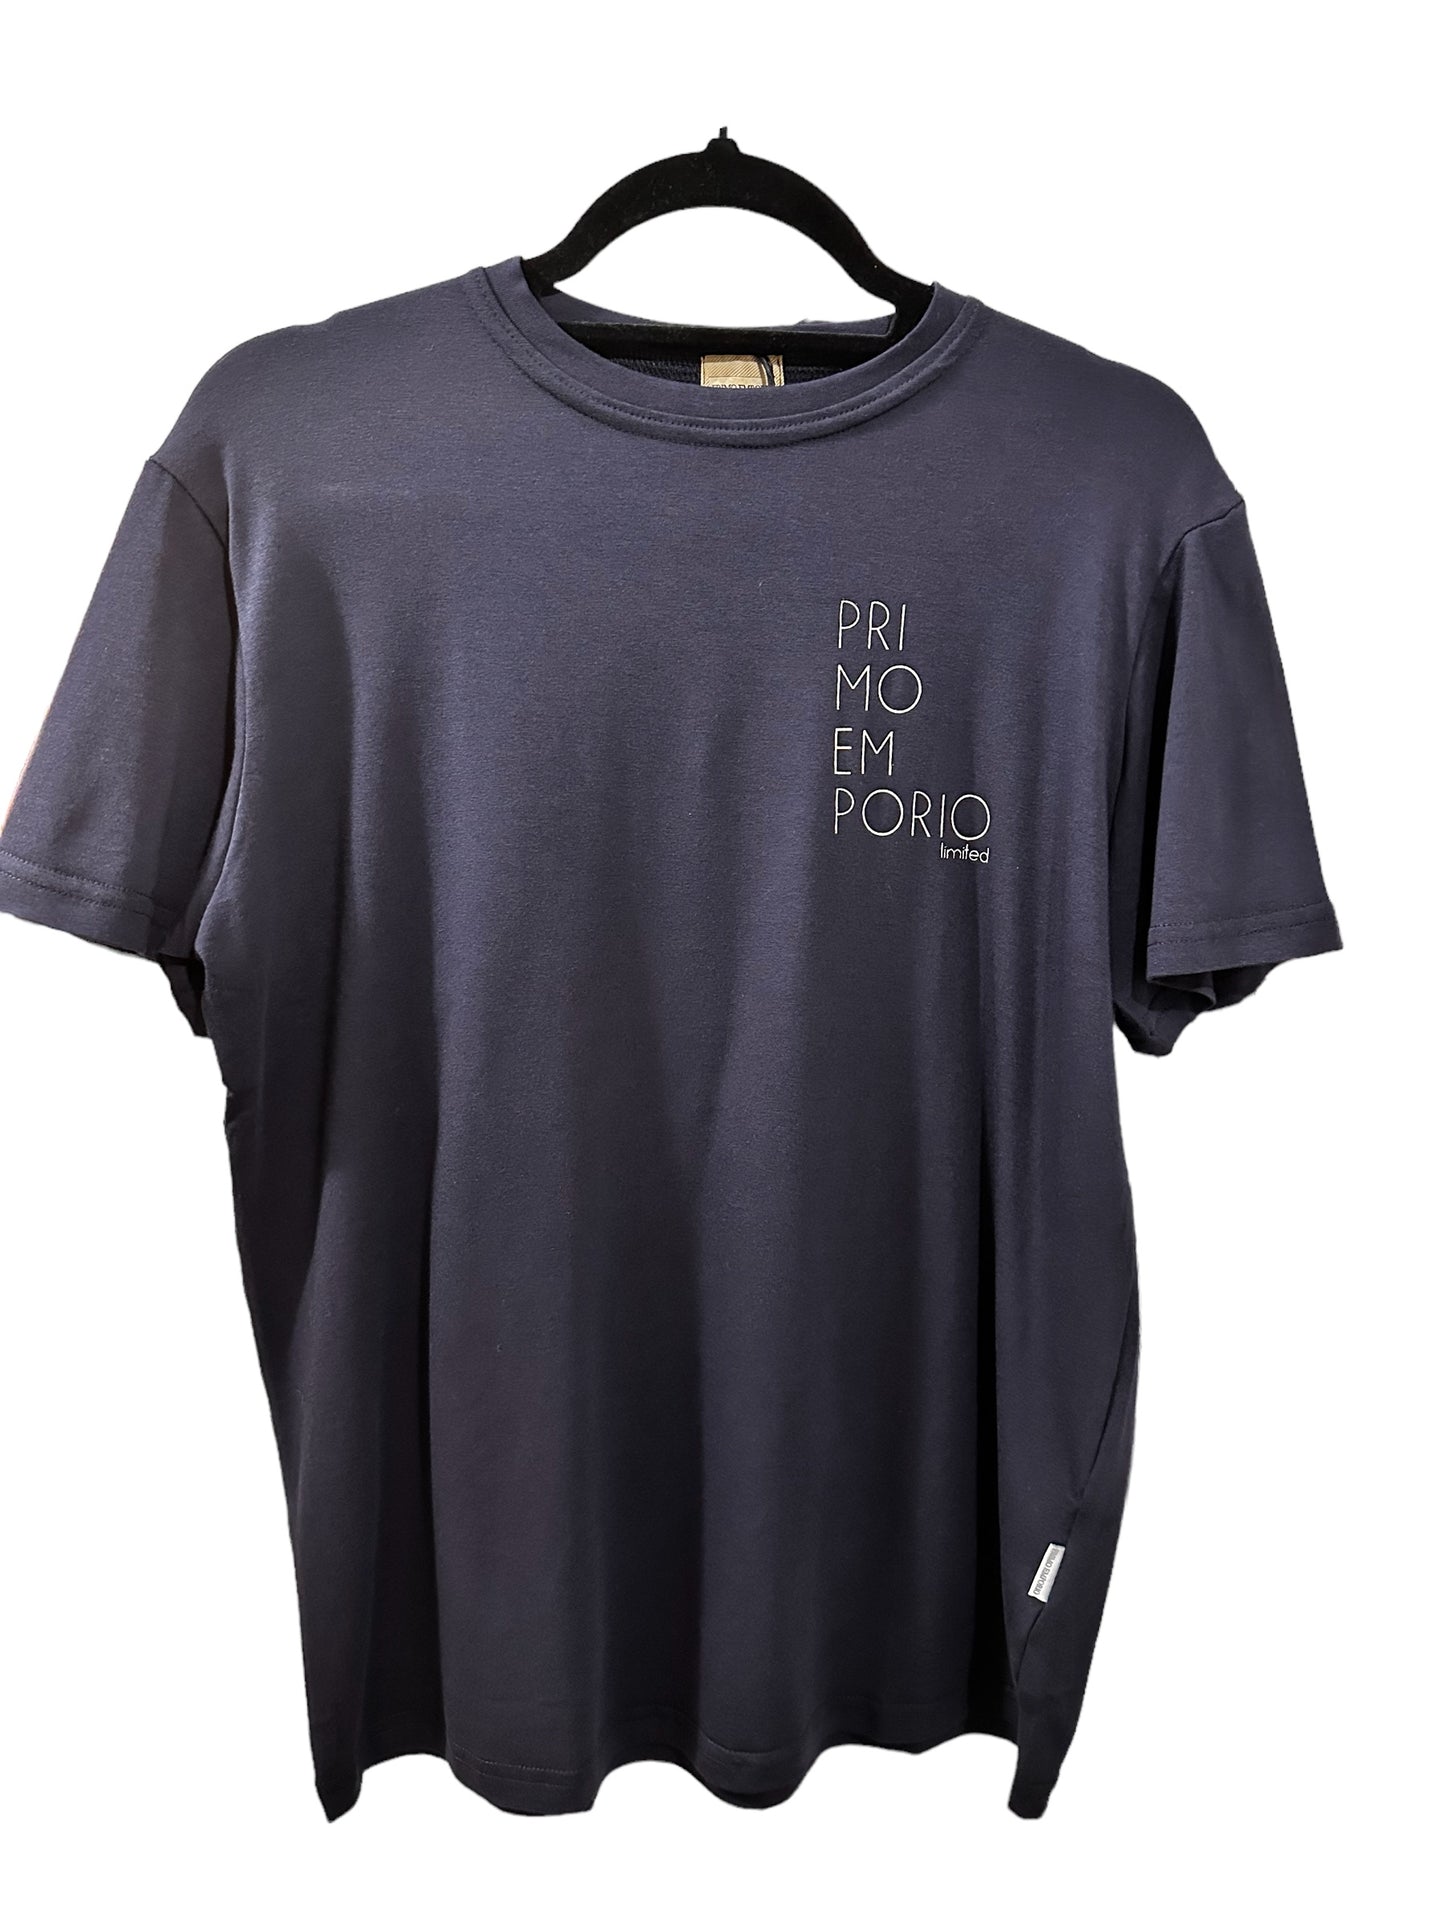 T-shirt Primo Emporio limited